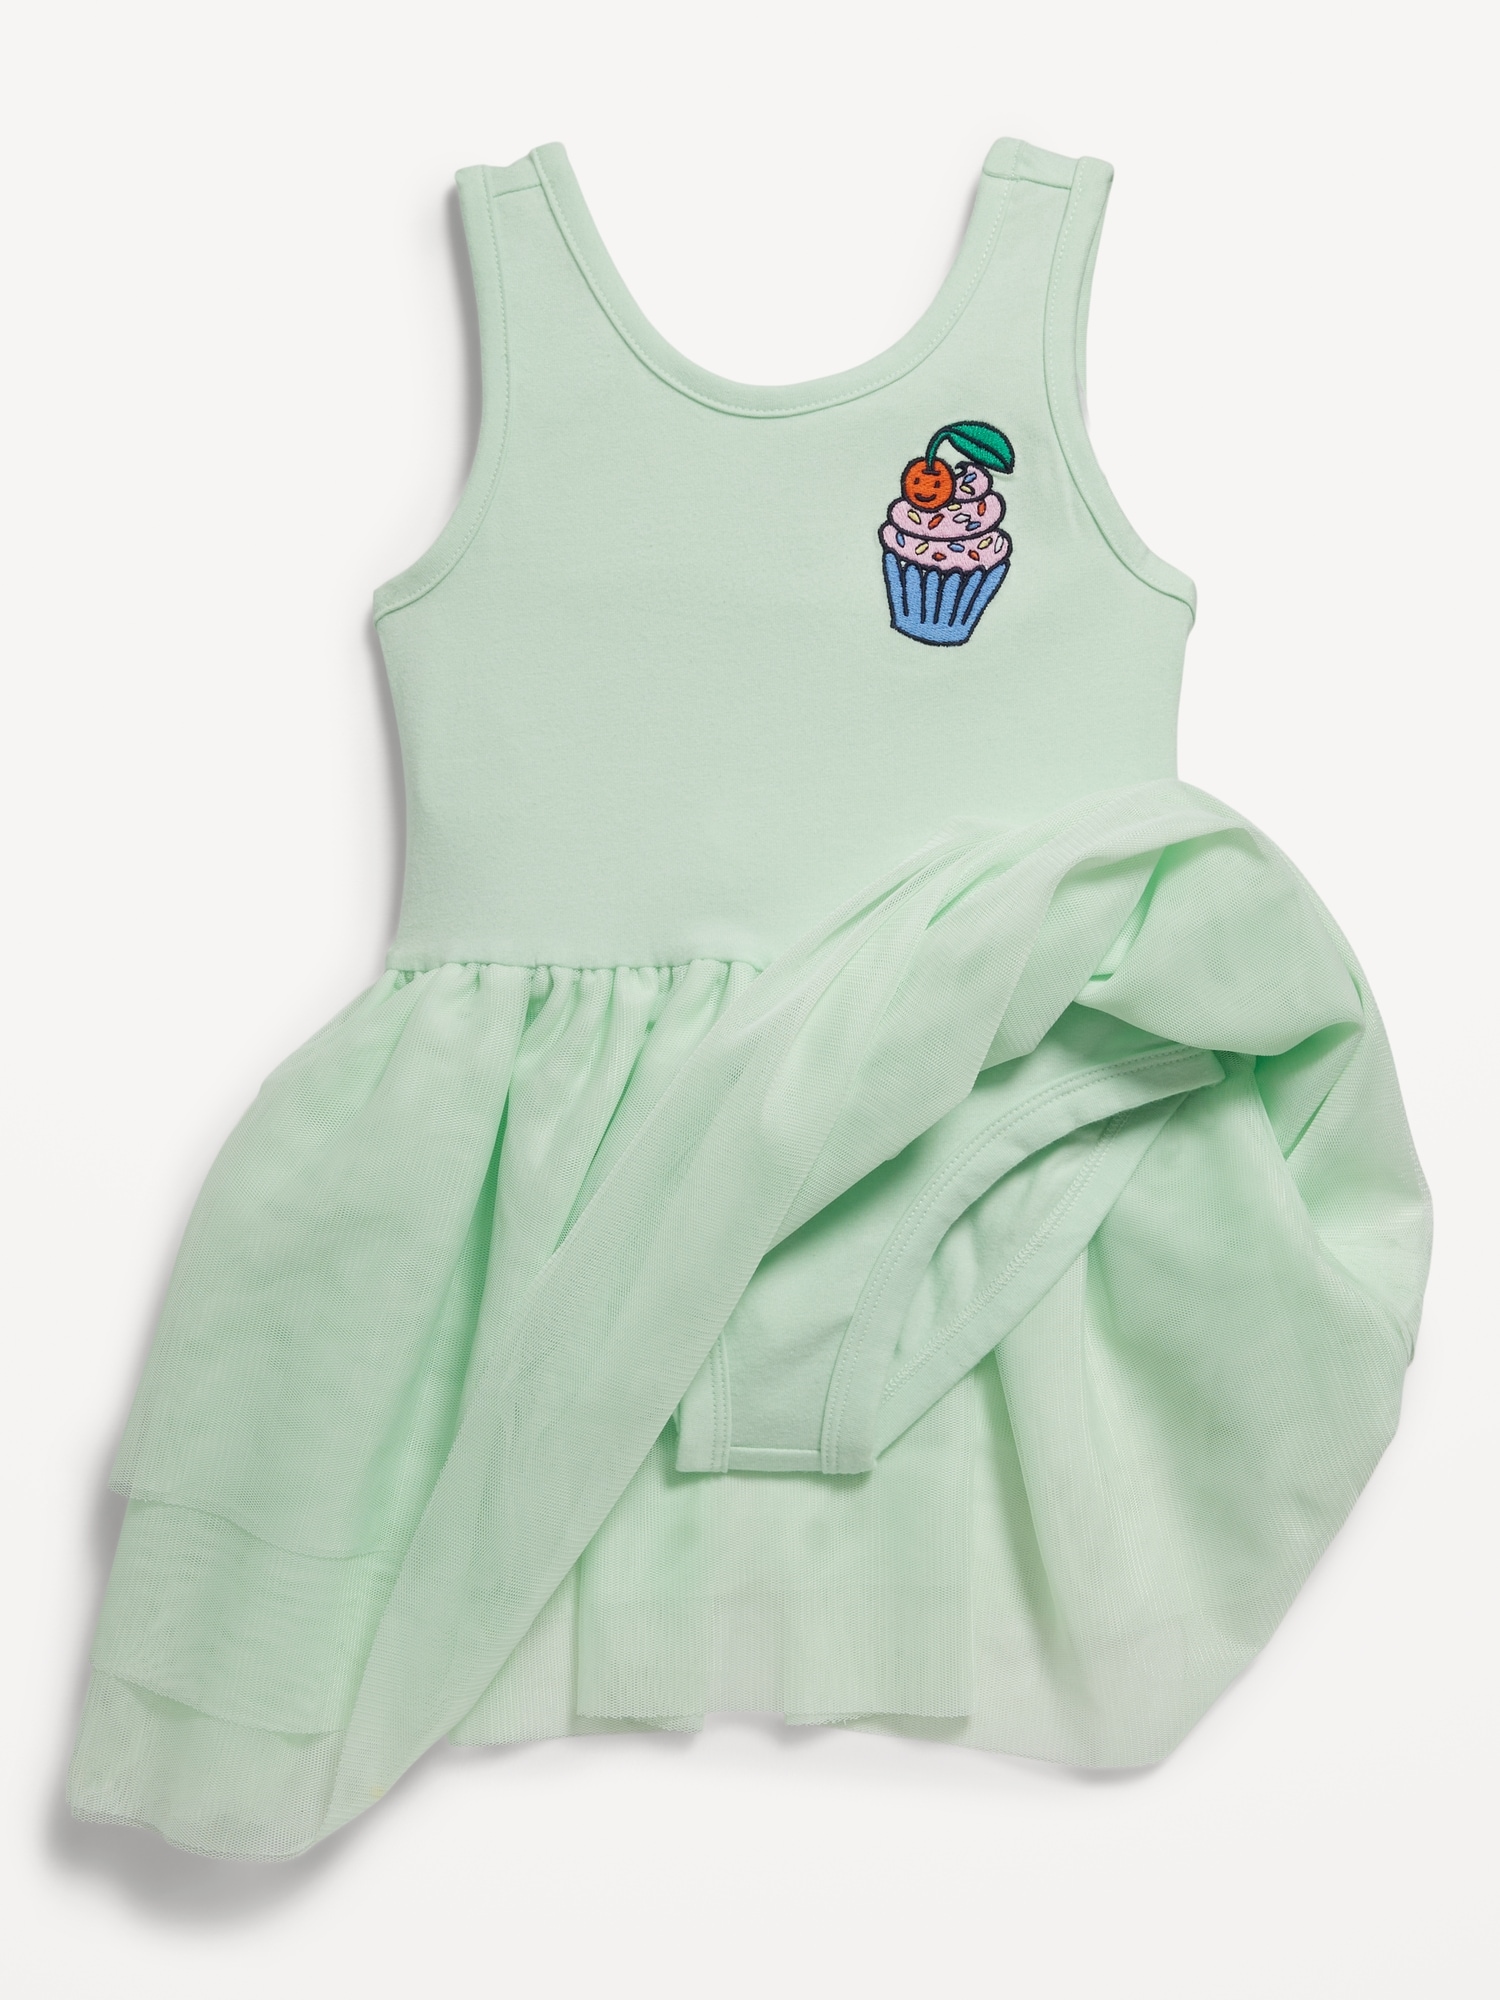 Sleeveless Bodysuit Tiered Tutu Dress for Toddler Girls